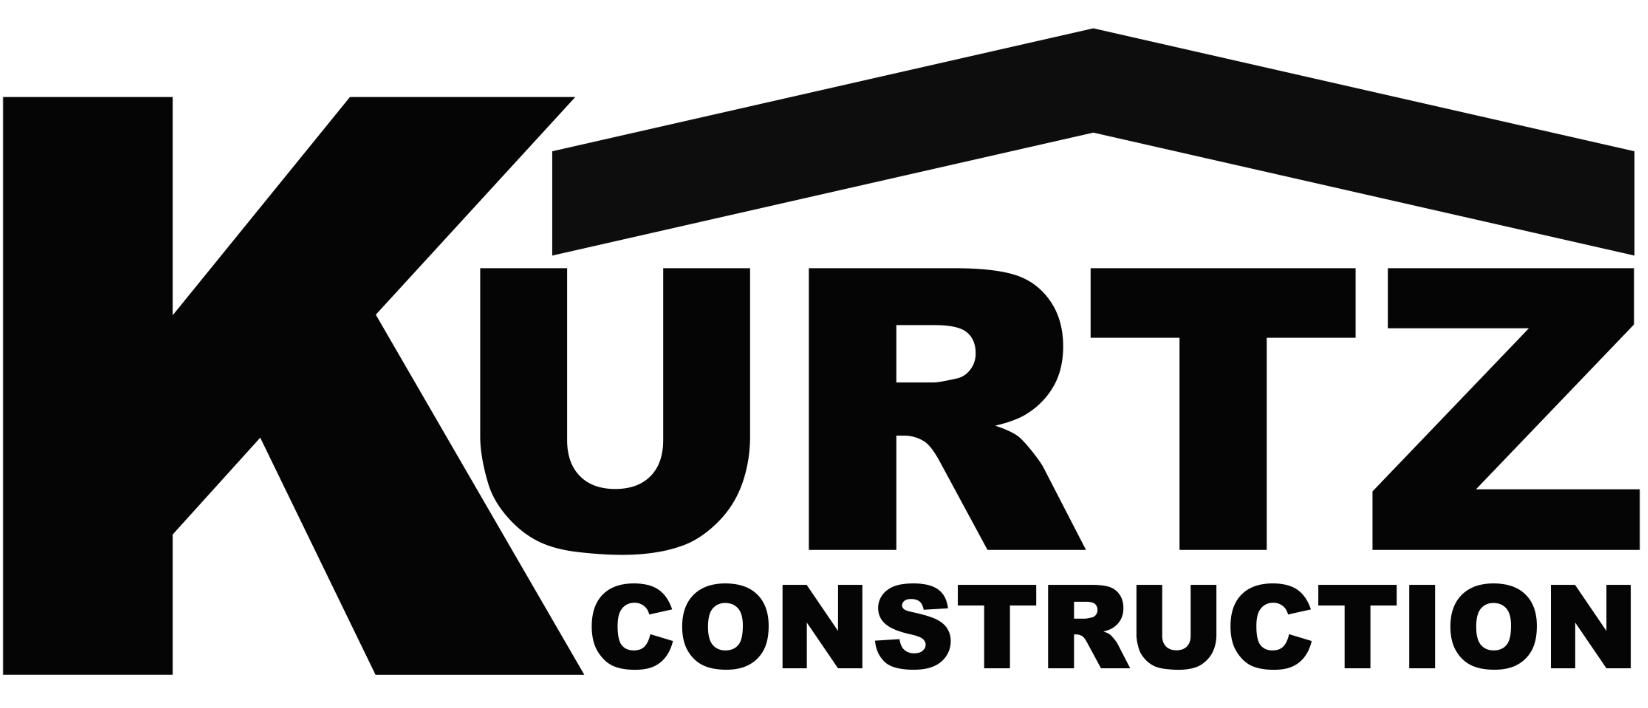 Kurtz Construction LLC logo